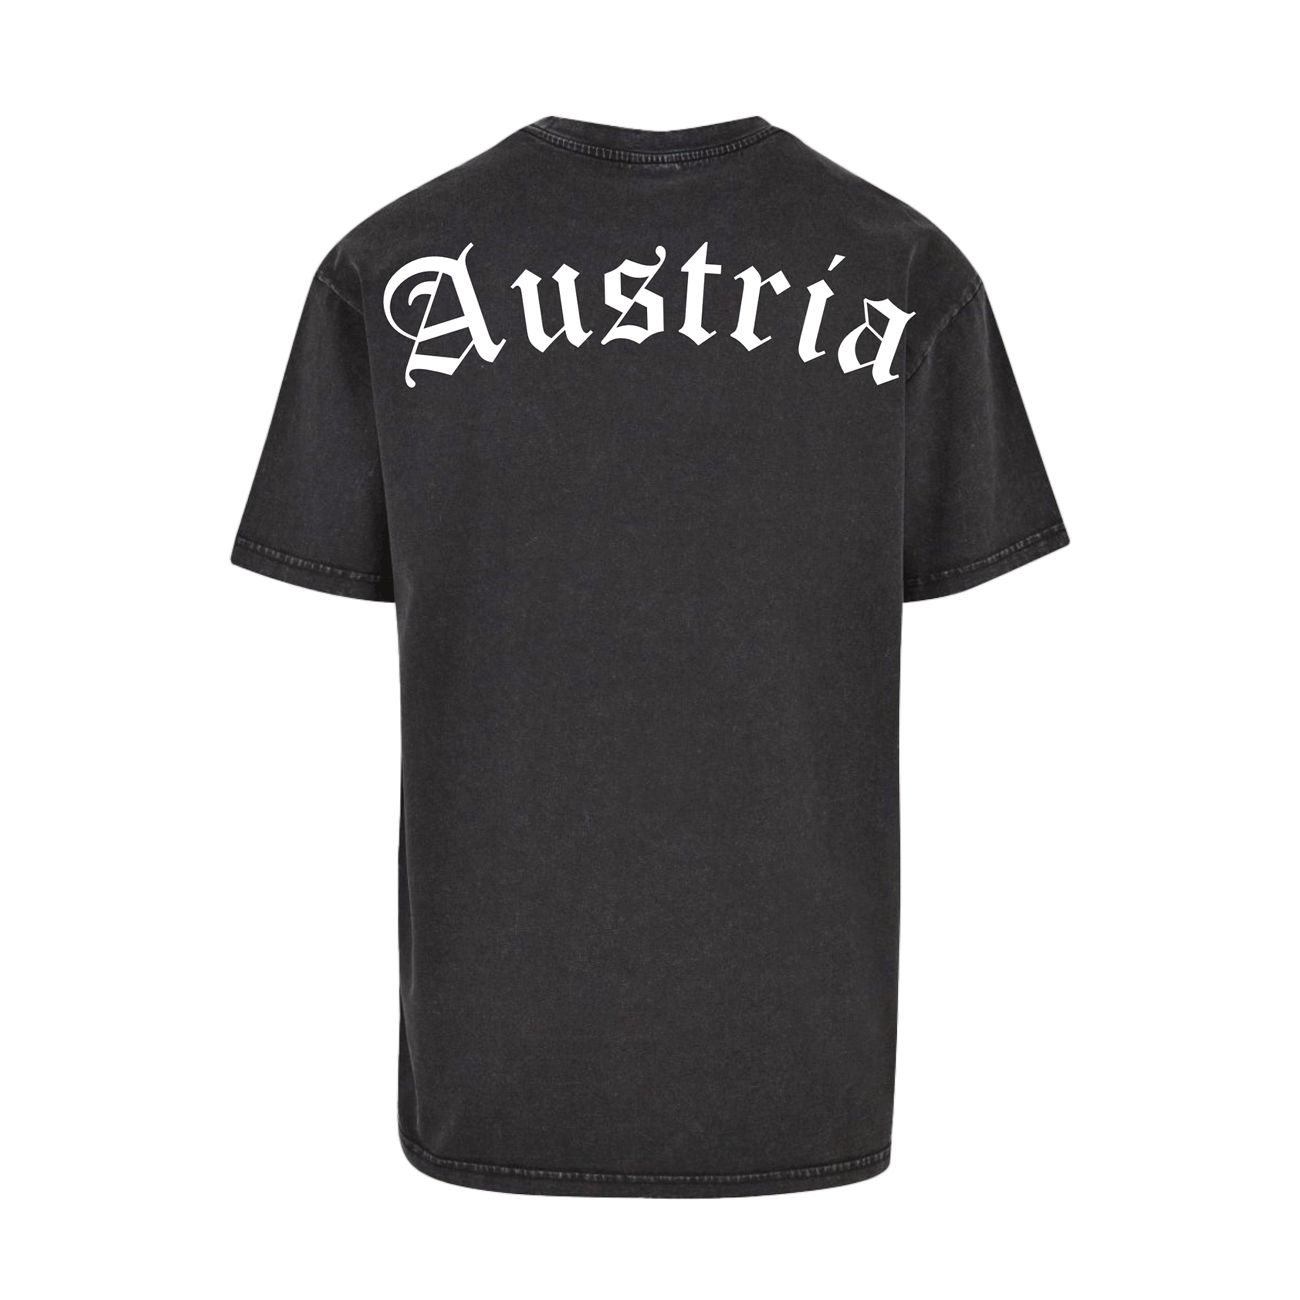 Streetwear Shirt Austria Hoamatkult